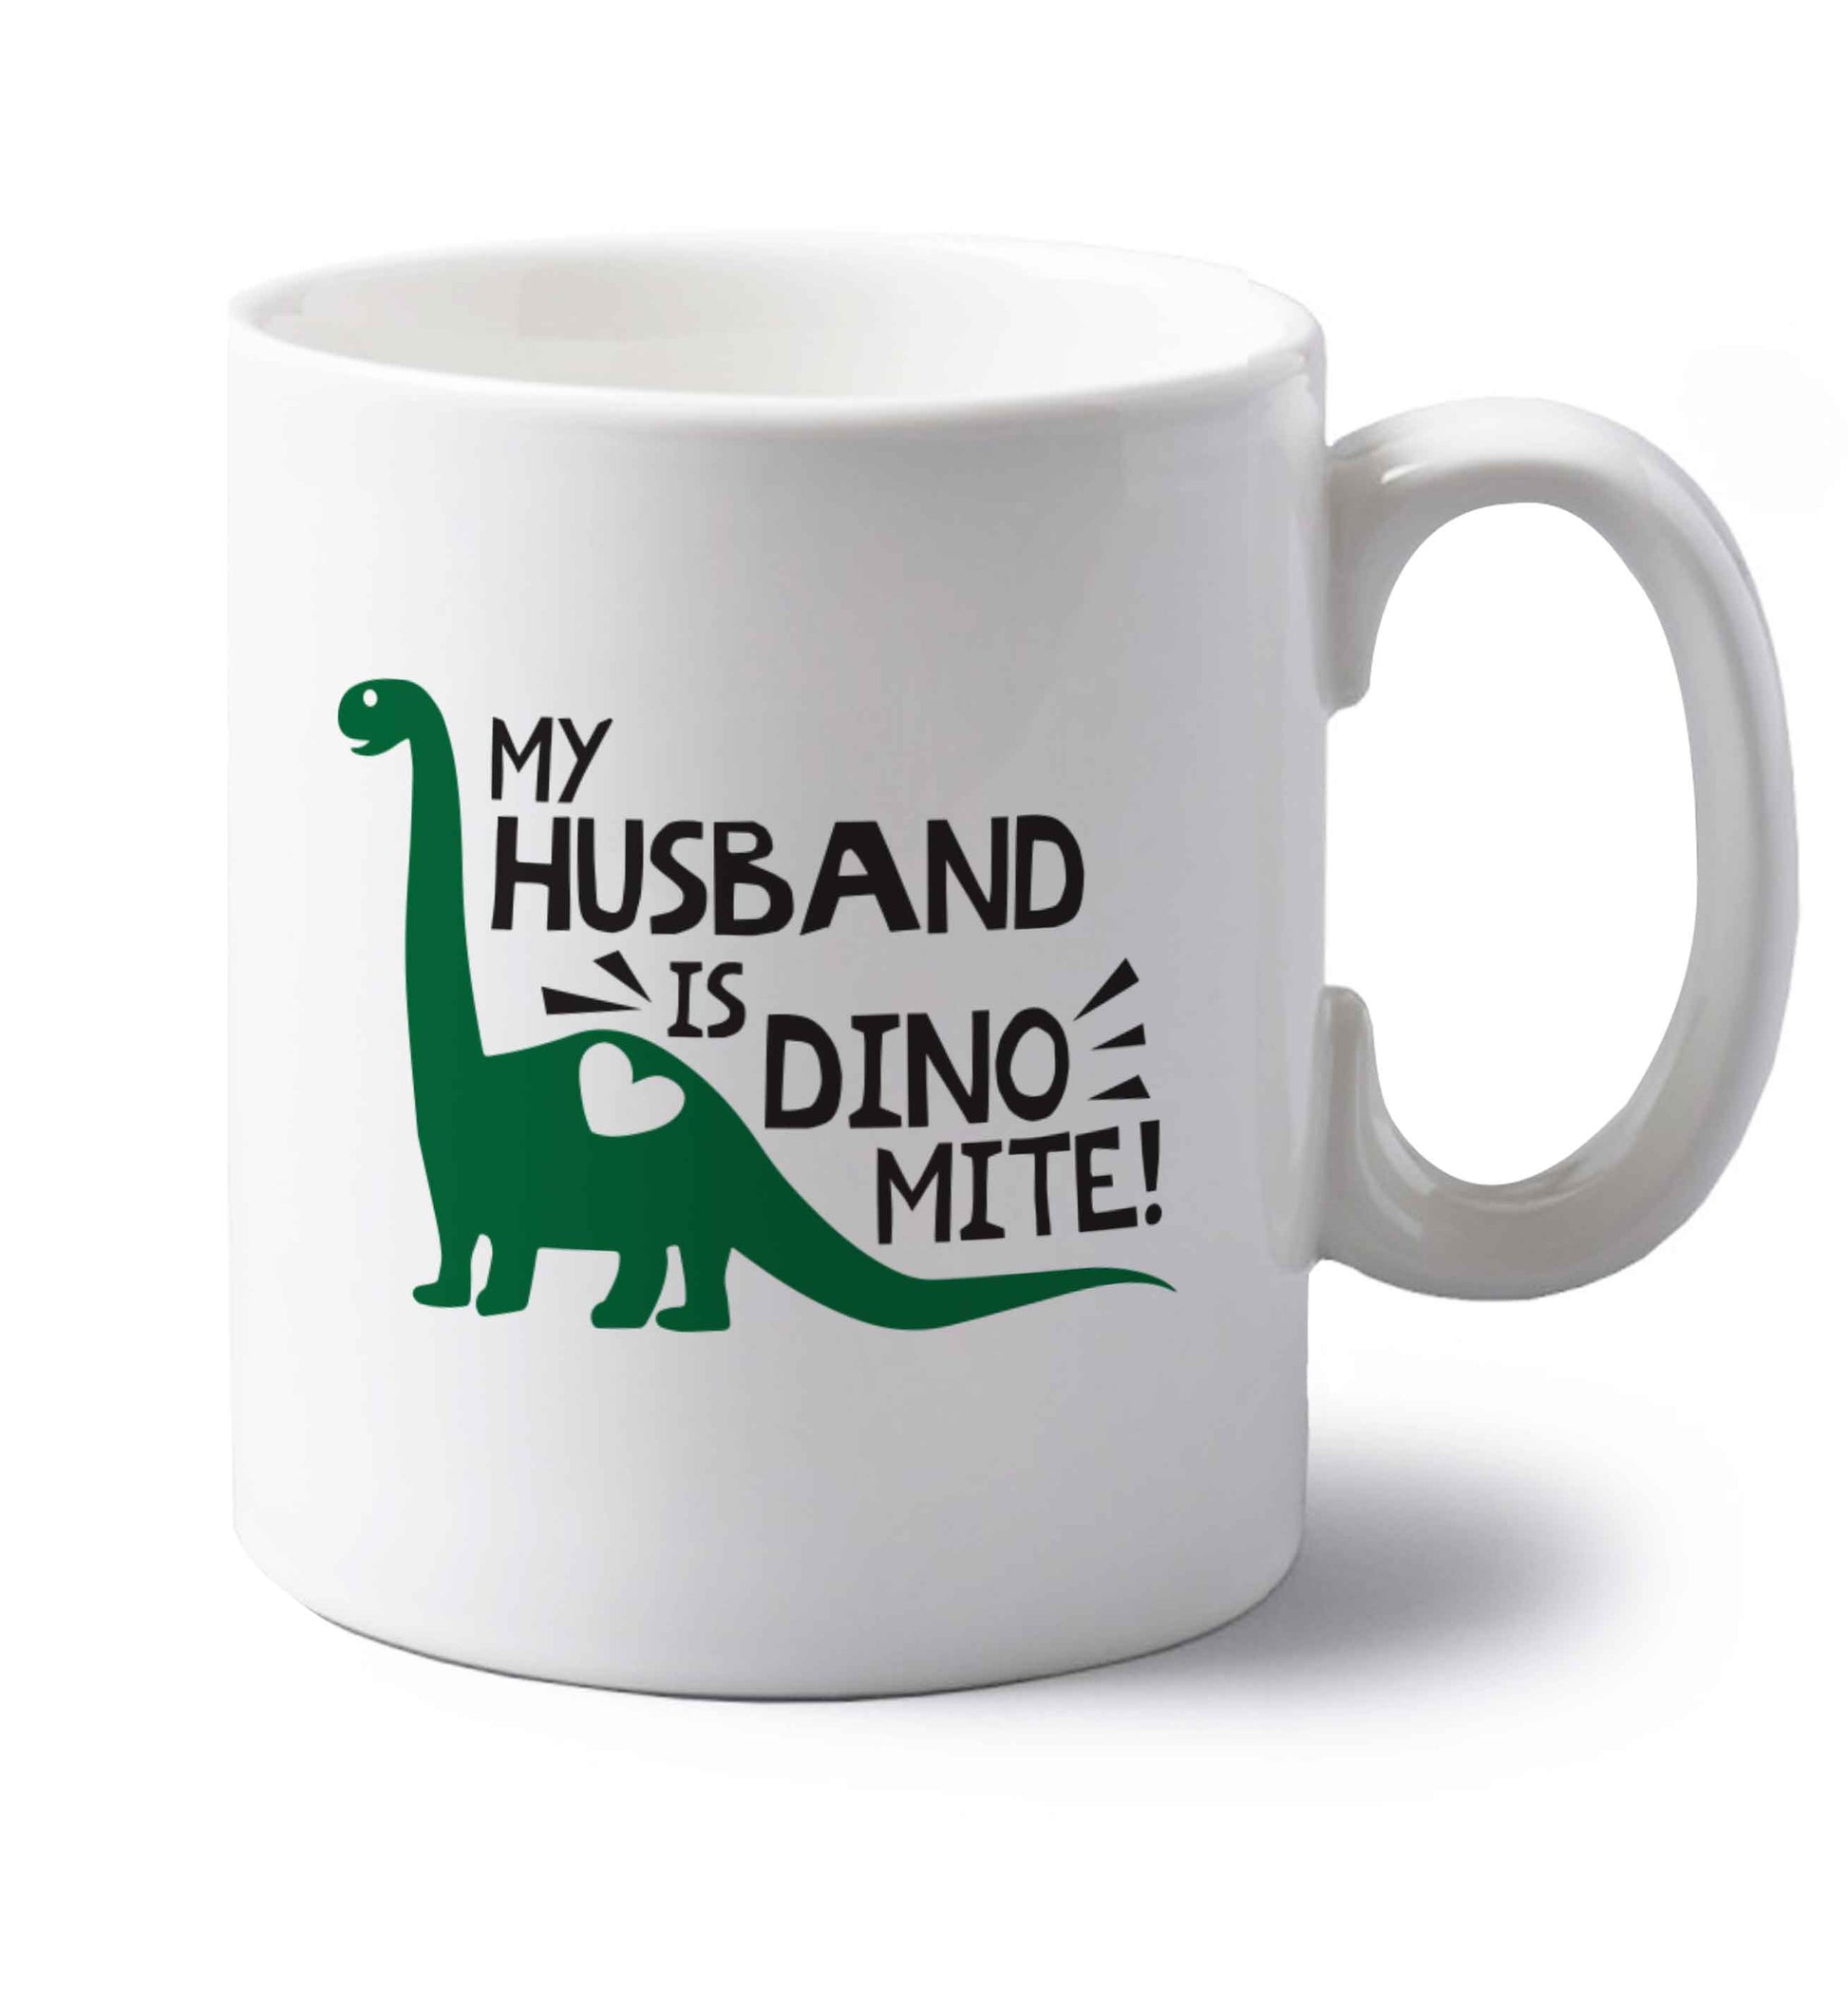 My husband is dinomite! left handed white ceramic mug 